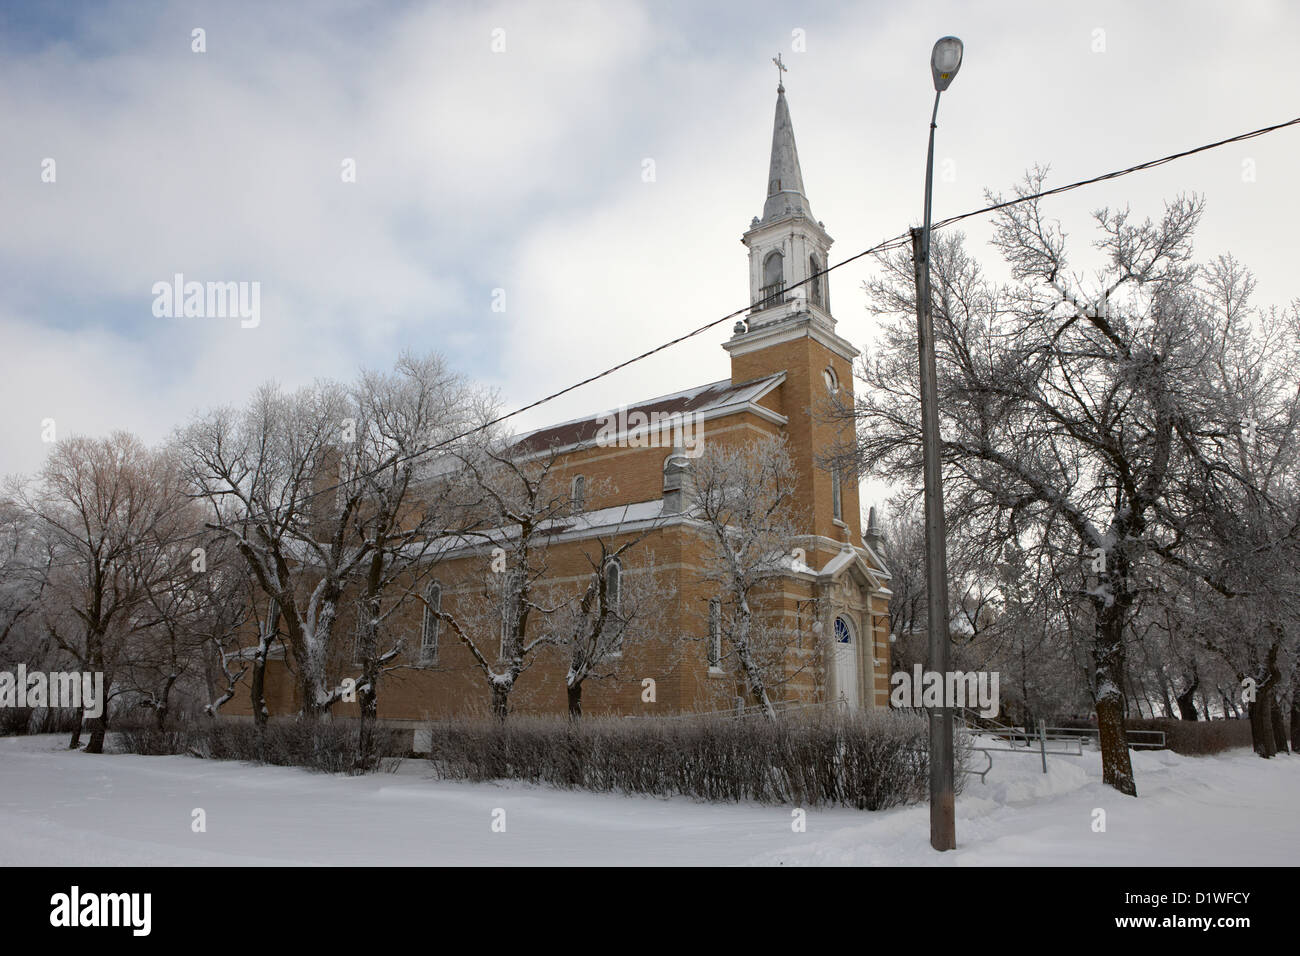 ehemaligen St. Josephs katholische Kirche in vergessen Saskatchewan Kanada Stockfoto